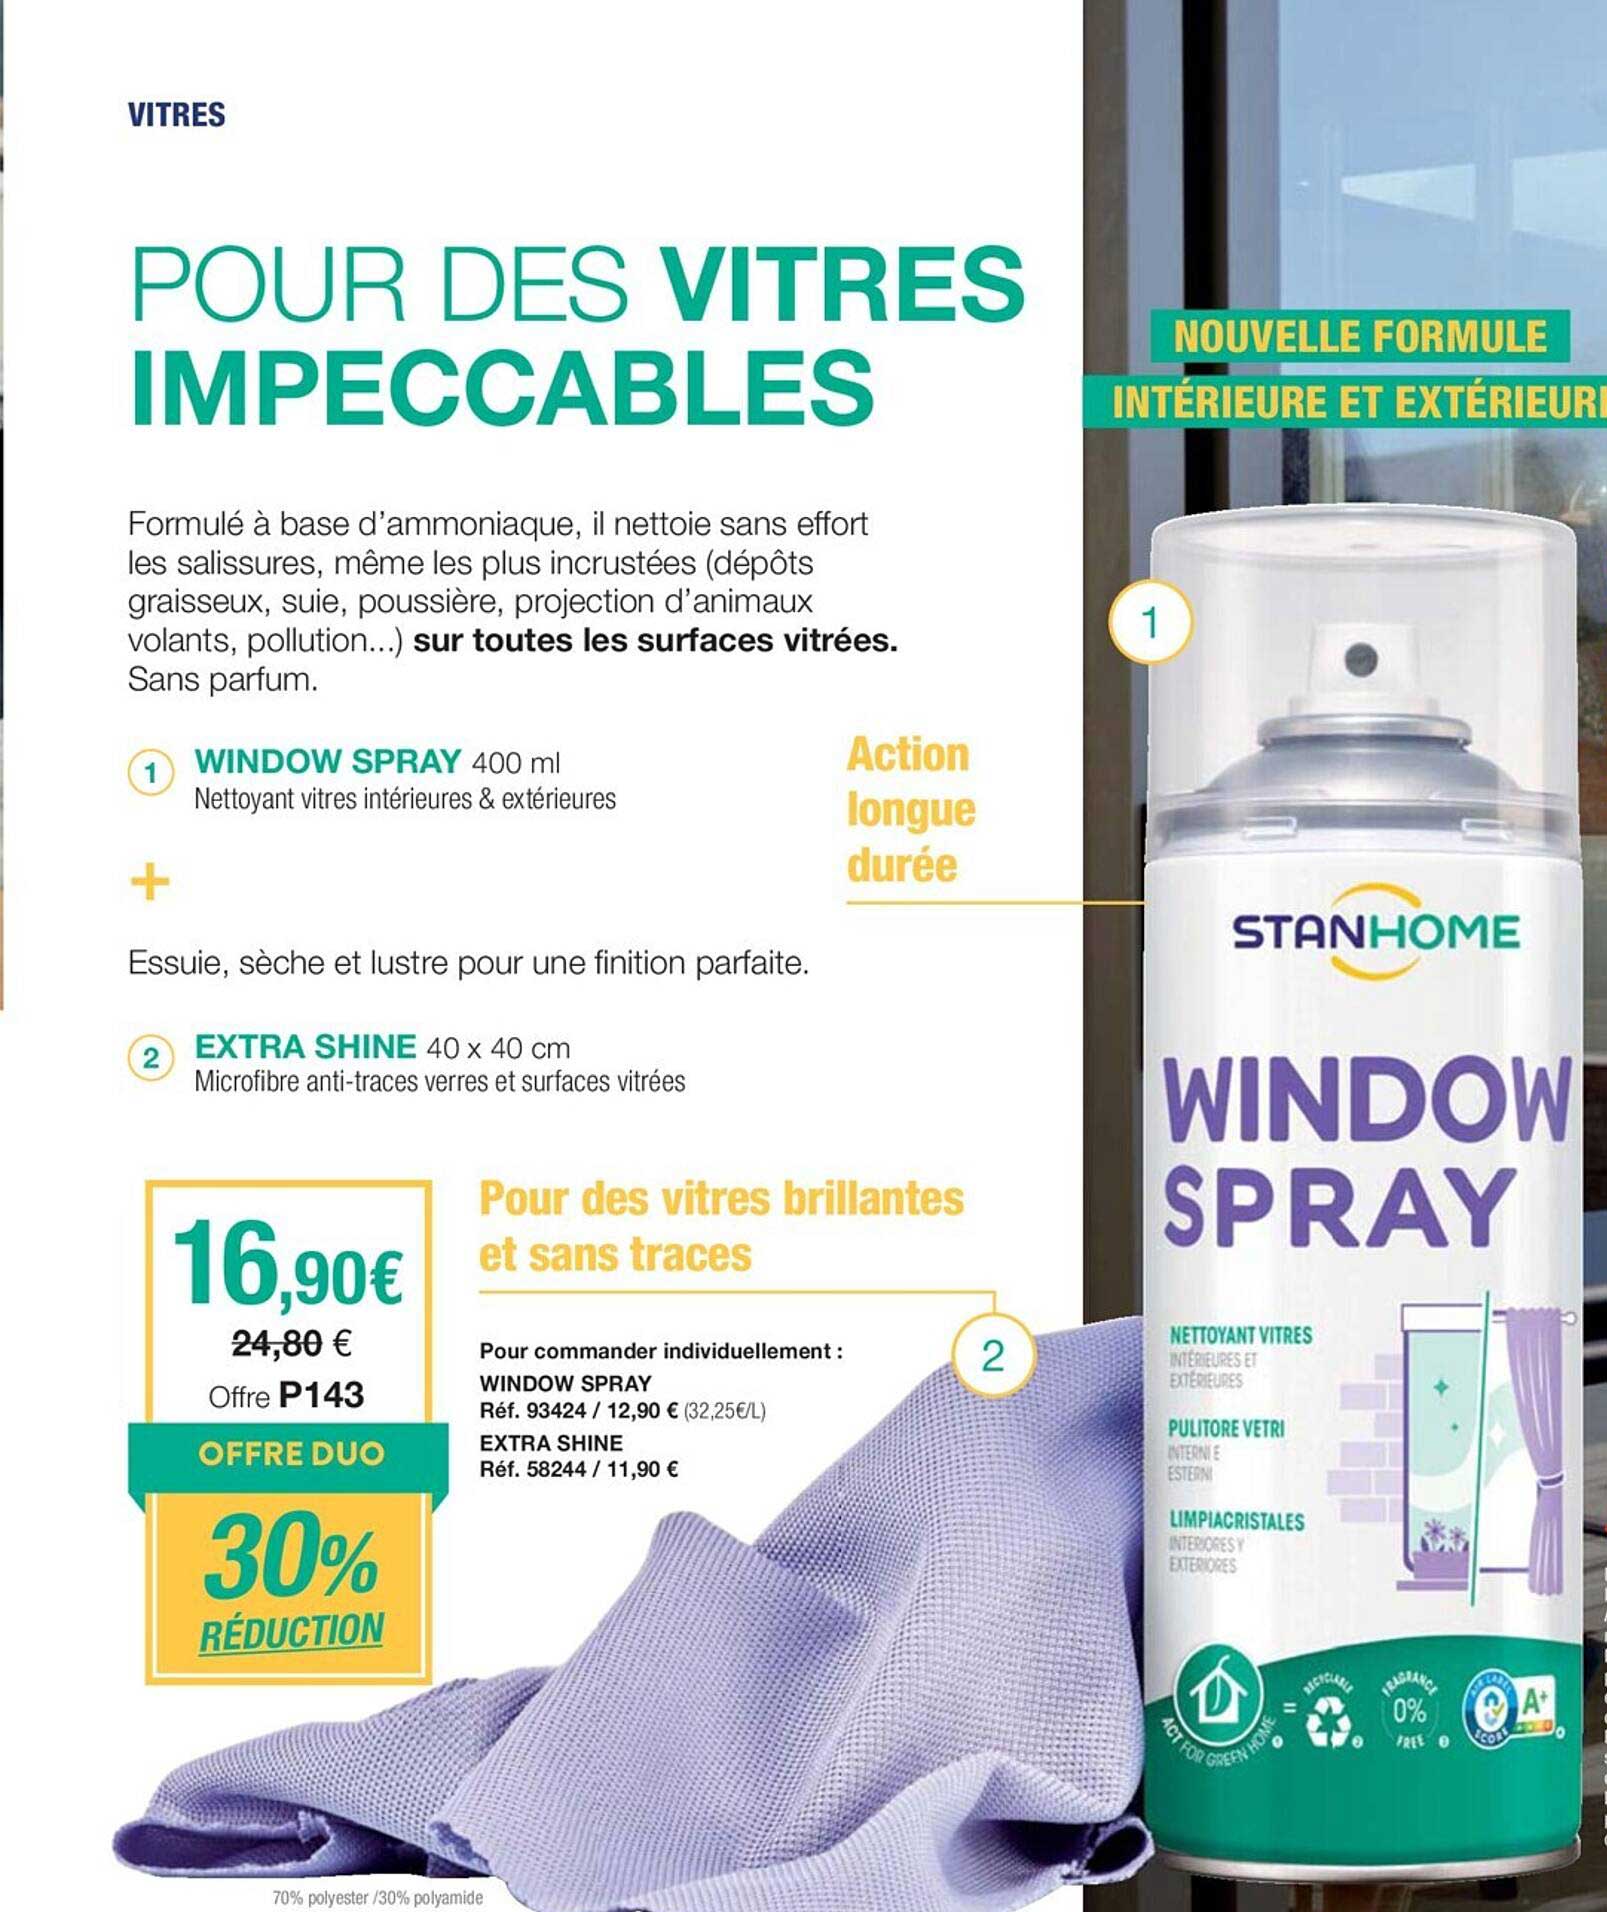 Promo Window Spray + Extra Shine chez Stanhome - iCatalogue.fr